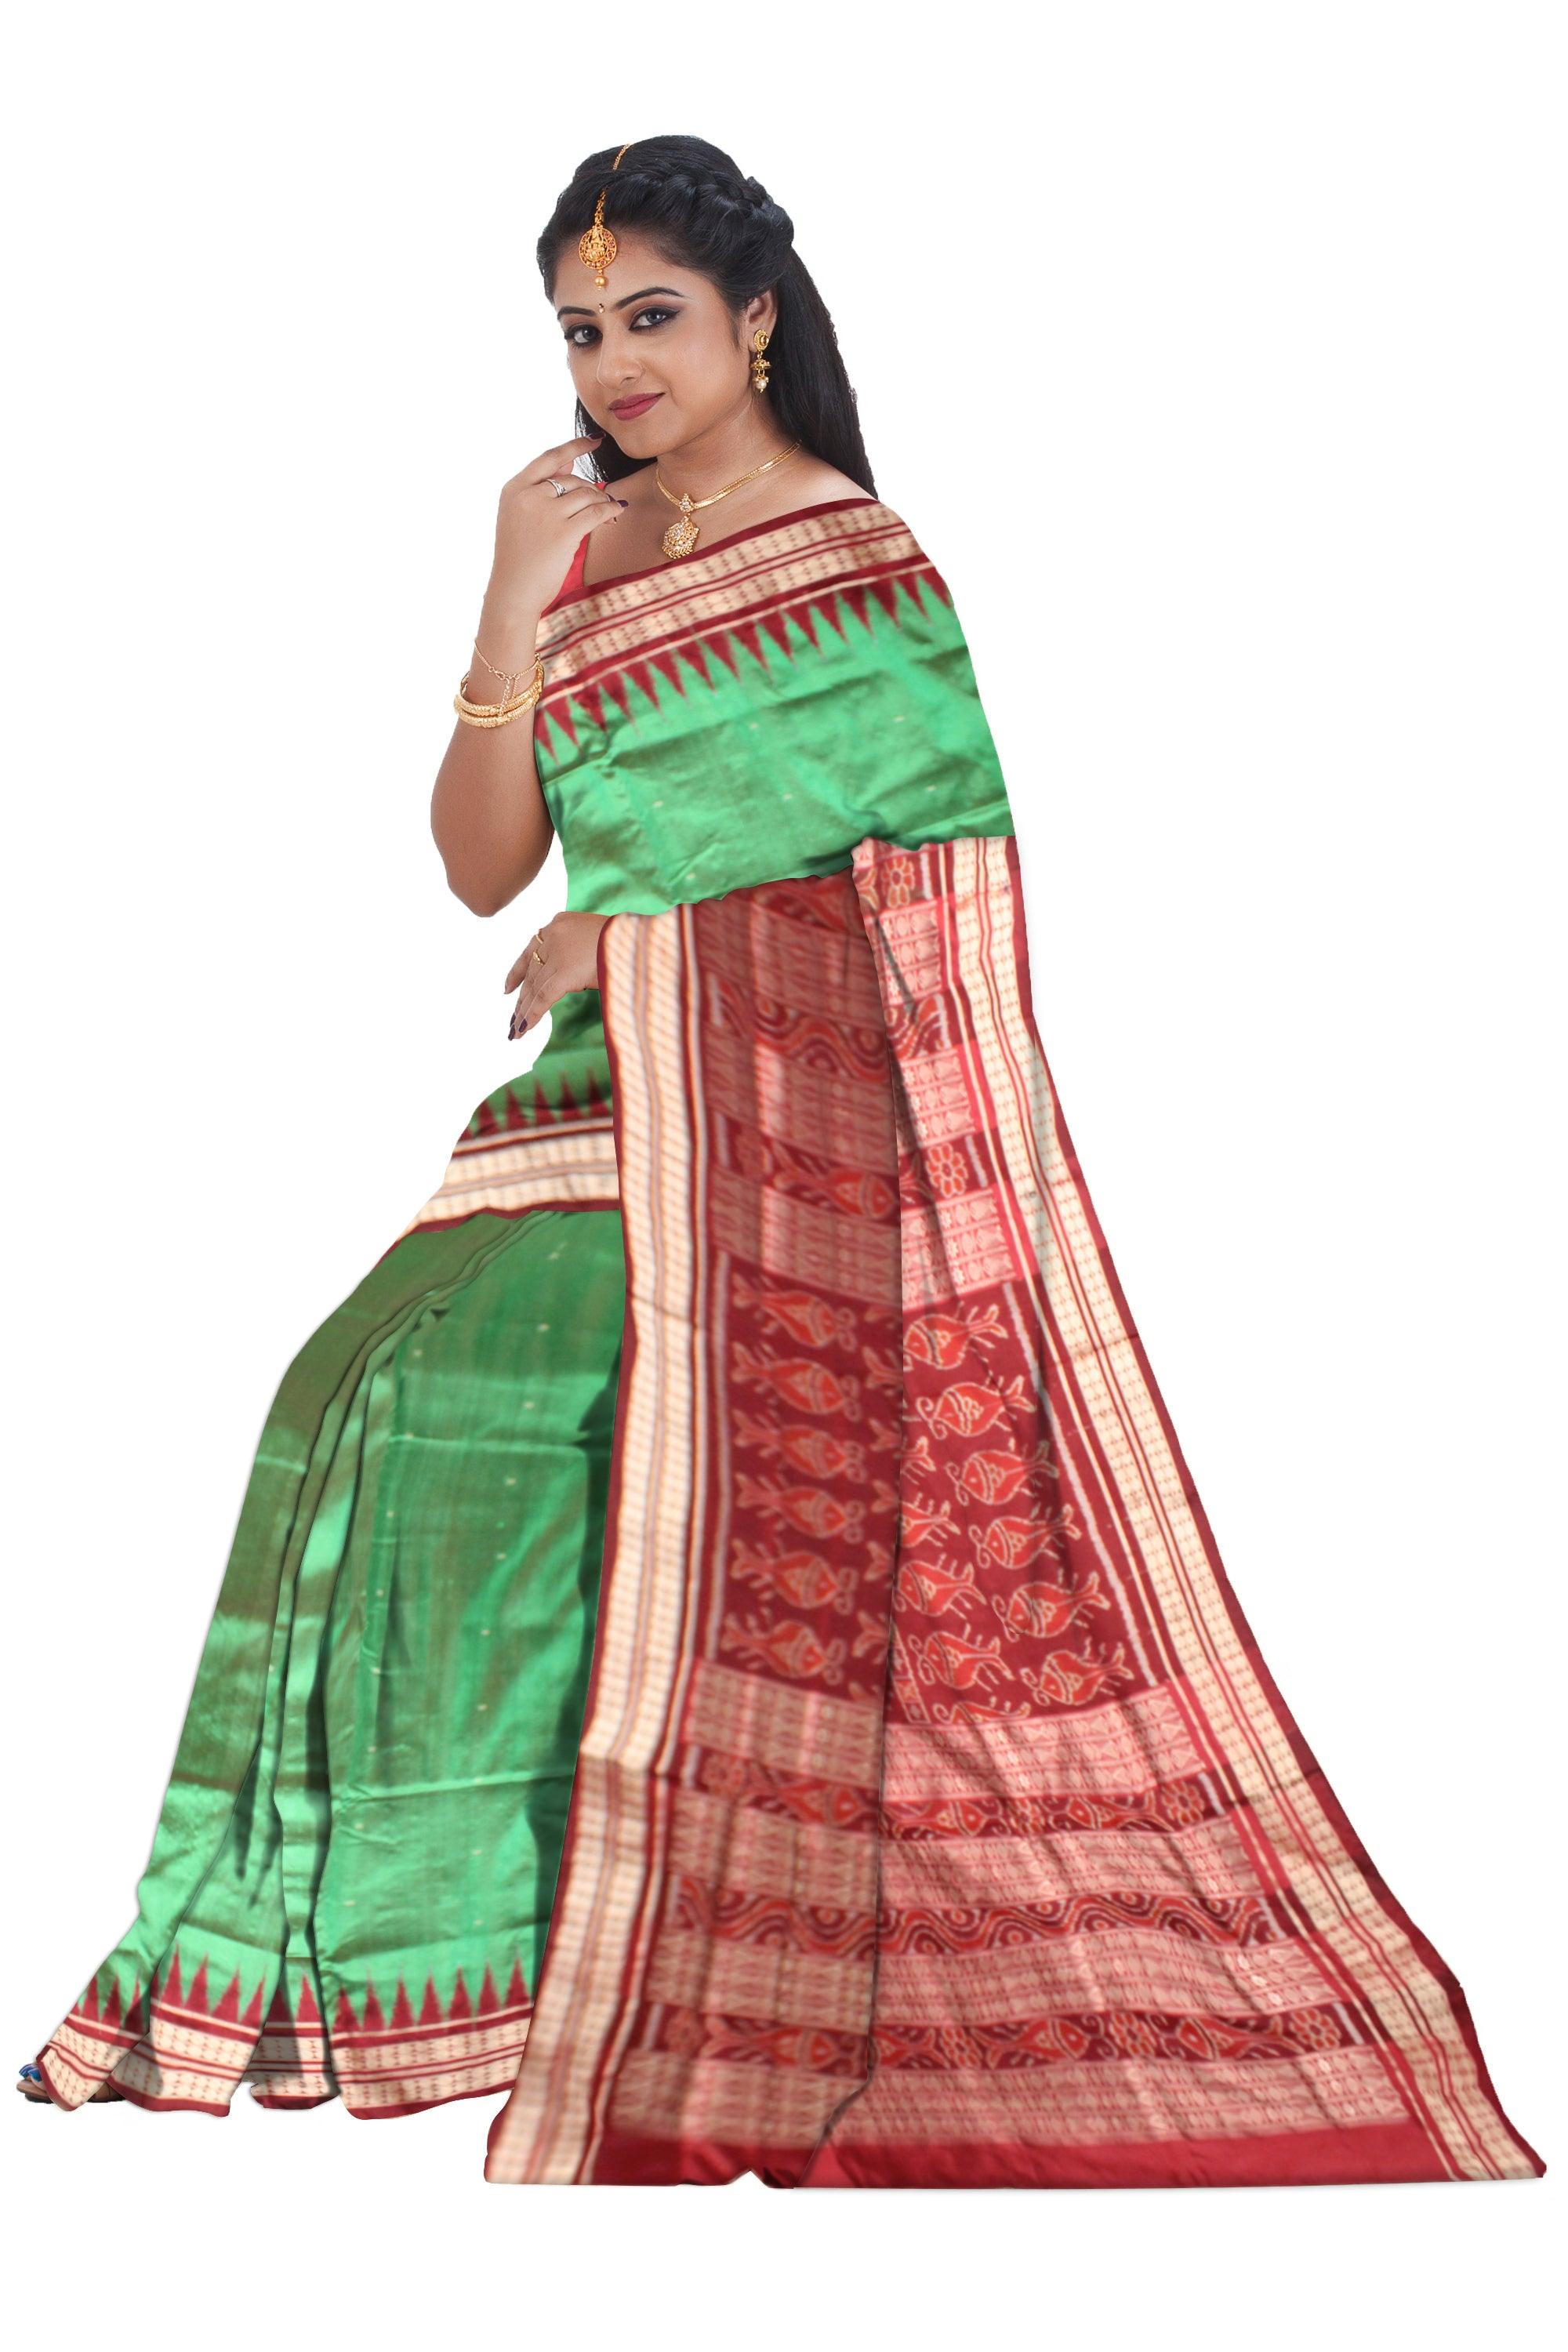 Sambalpuri Pata Saree in Green Color in plain design with Maroon Border with blouse piece. - Koshali Arts & Crafts Enterprise